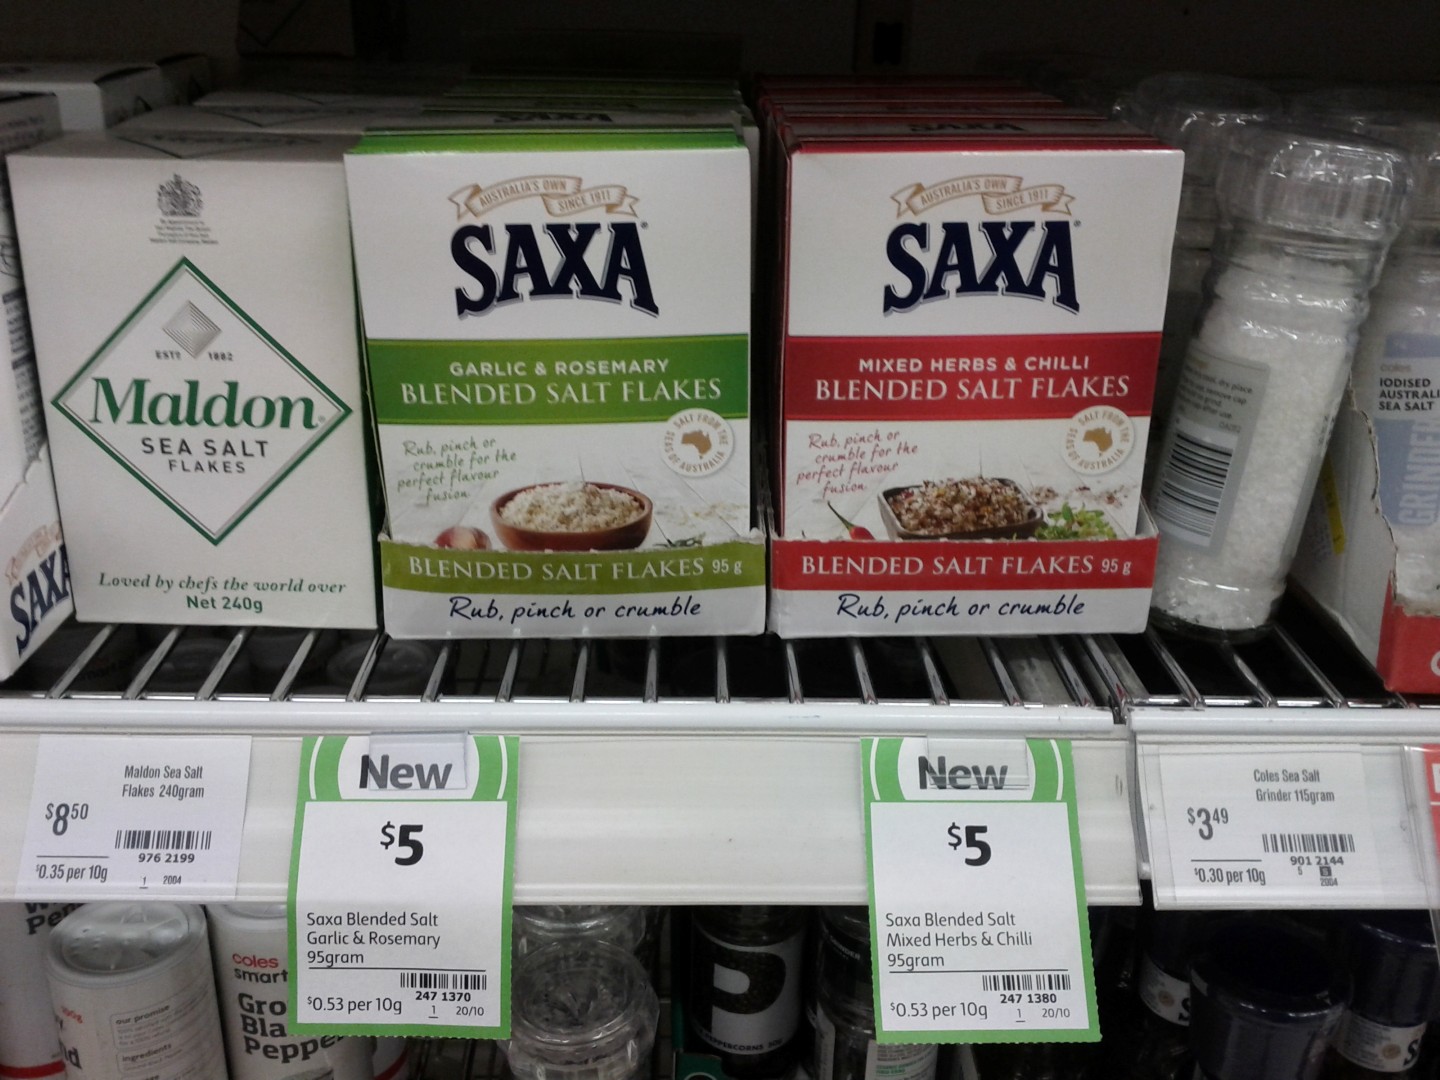 Saxa 95g Garlic & Rosemary, Mixed Herbs & Chilli Blended Salt Flakes